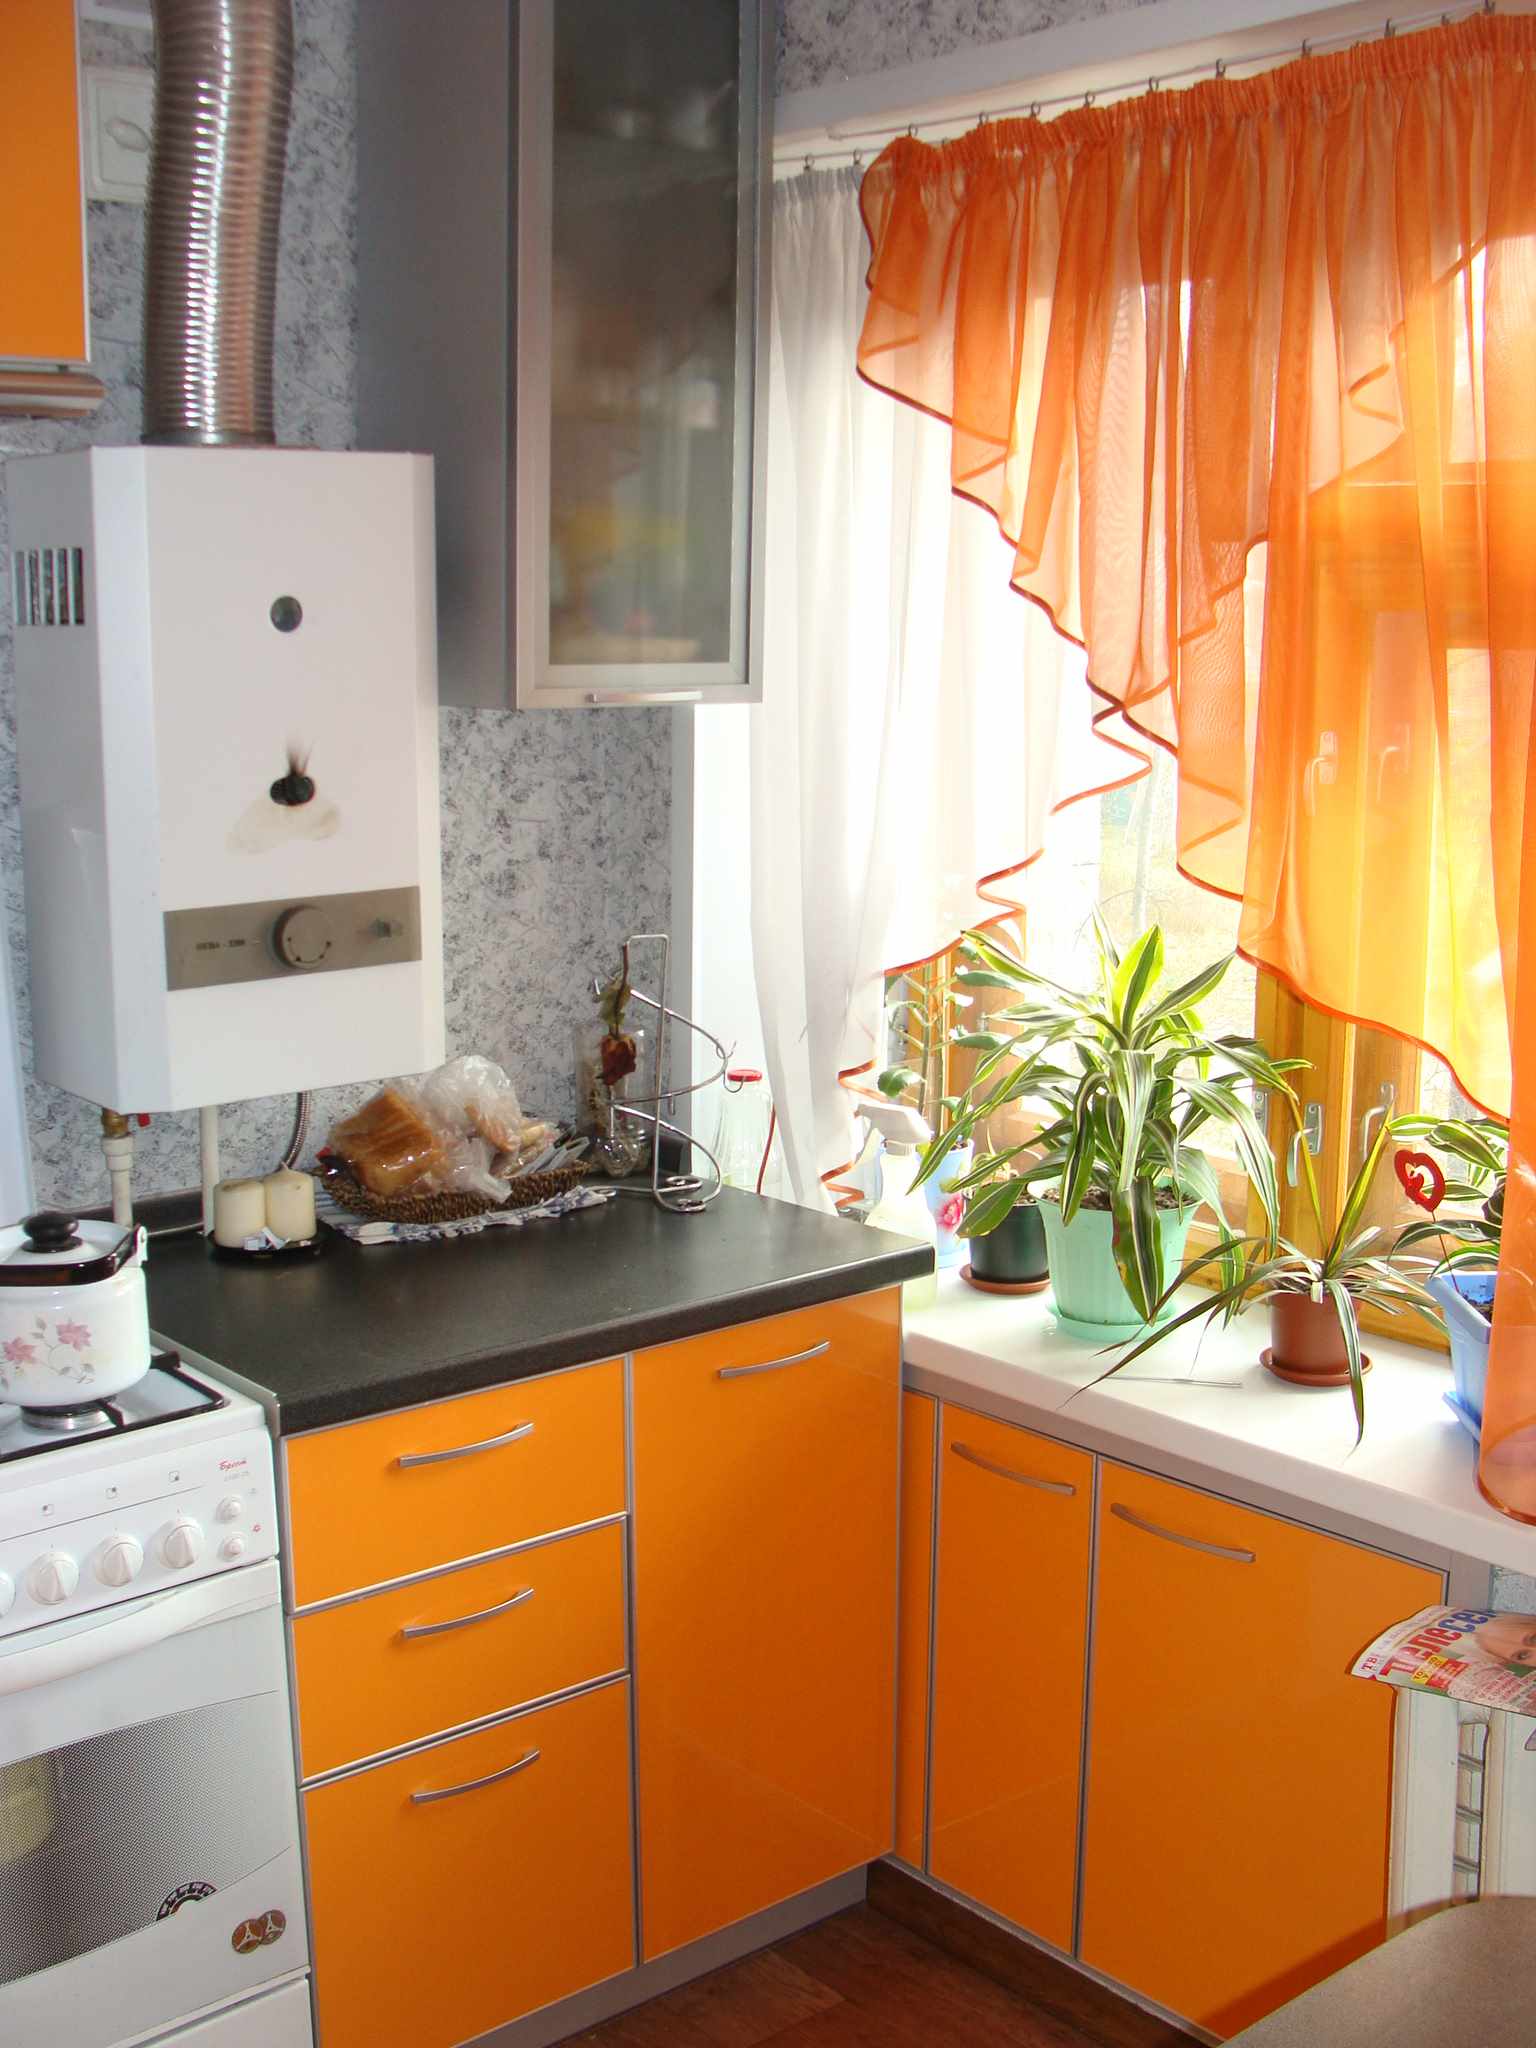 Un esempio di un bellissimo interno cucina con una caldaia a gas